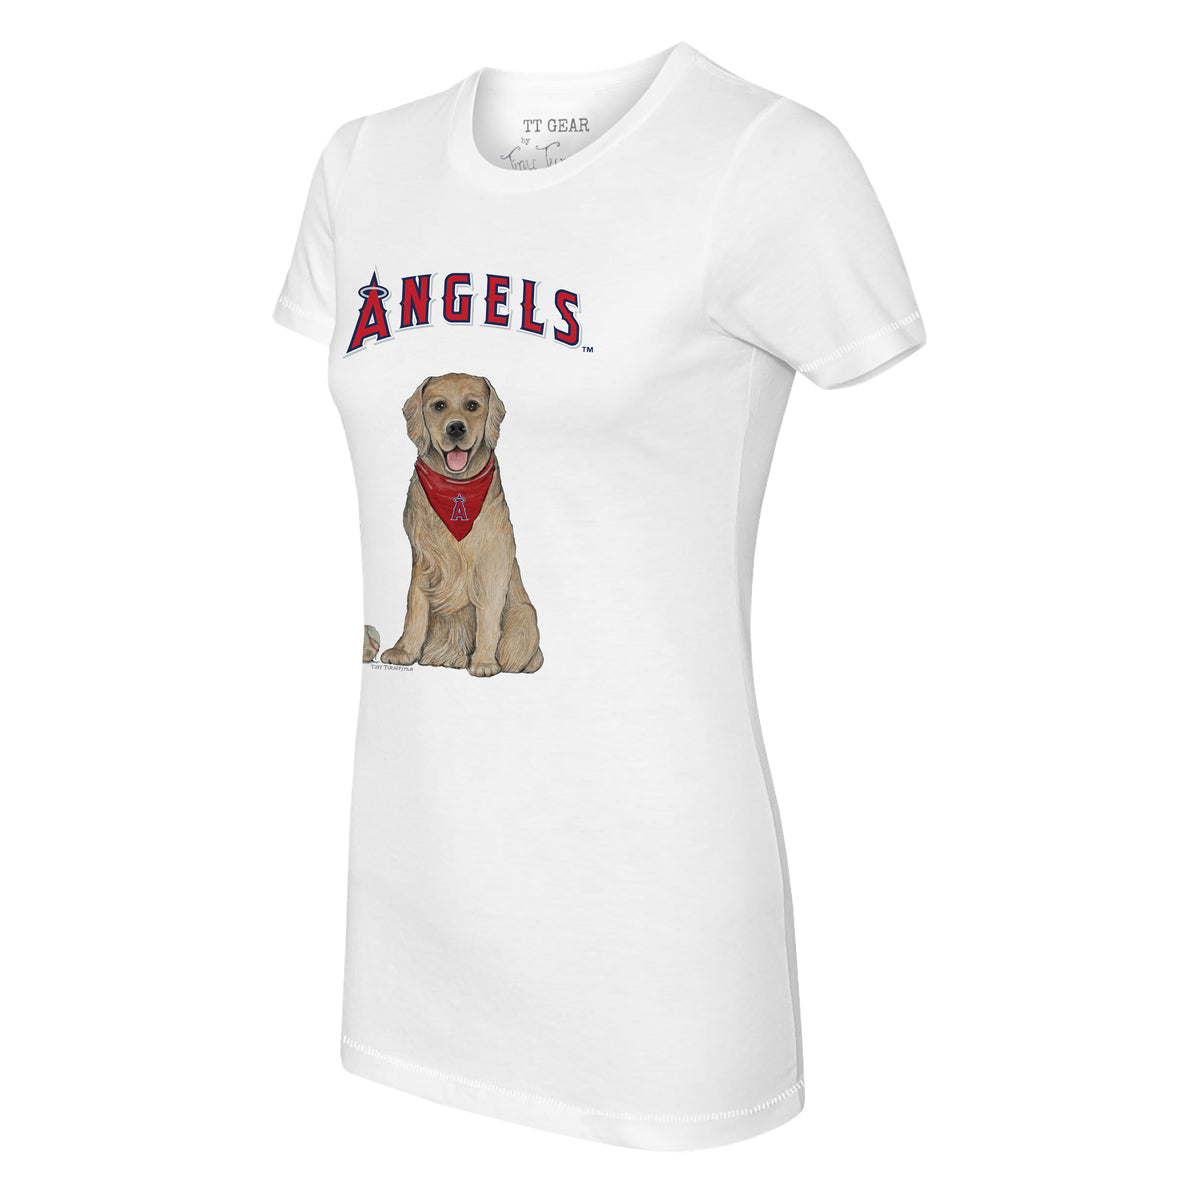 Los Angeles Angels Golden Retriever Tee Shirt